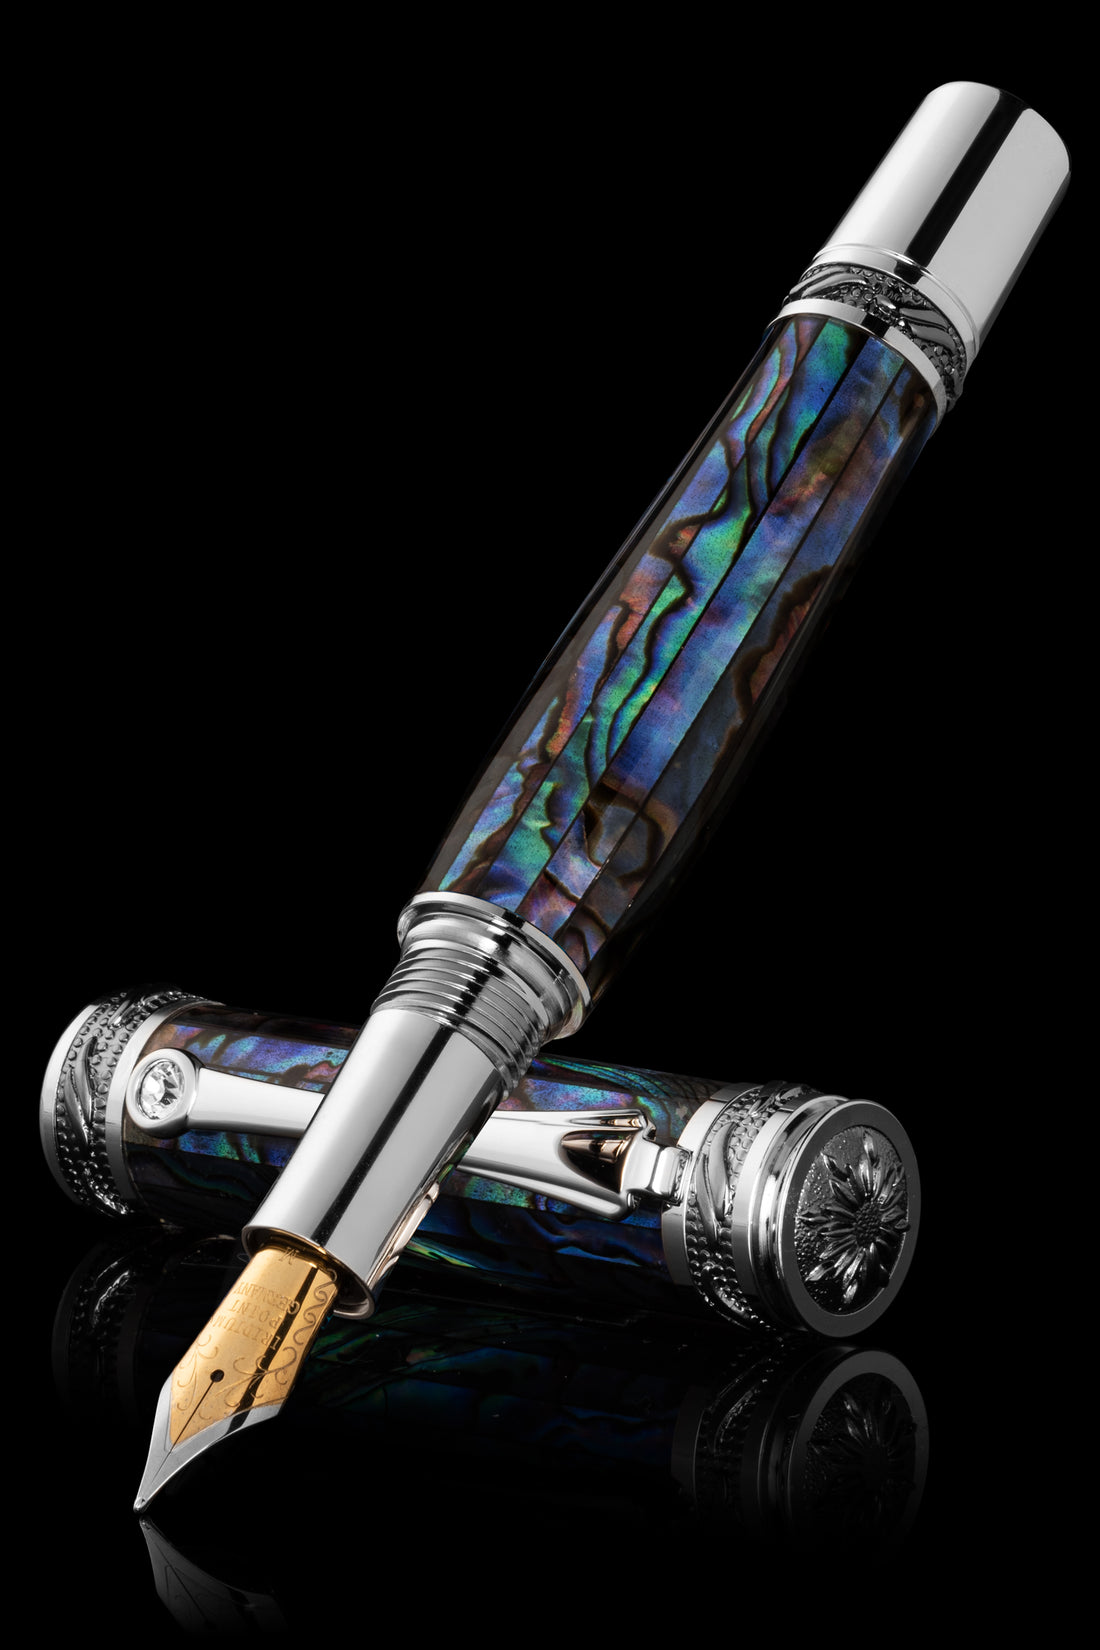 Tycoon Lustrous Blue Fountain Pen